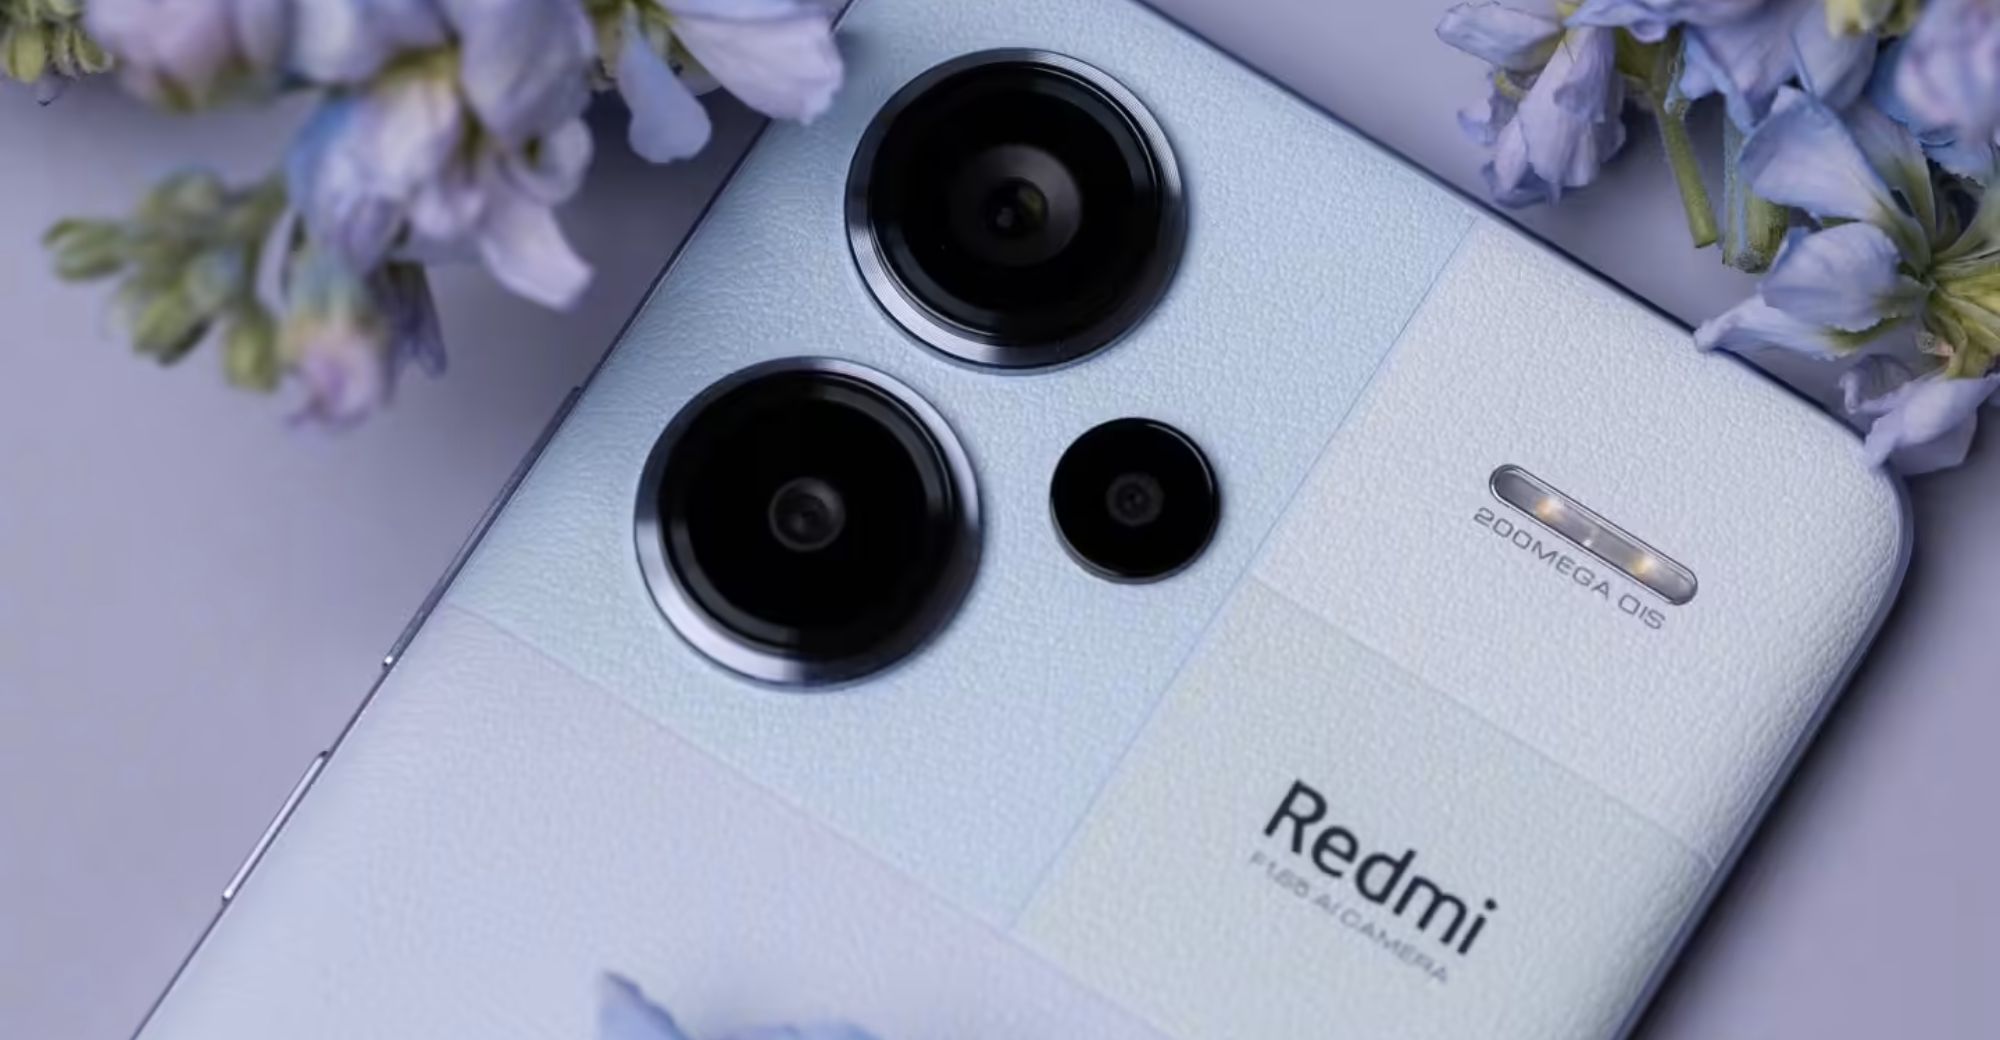 Redmi Note 13 Pro Plus 16GB - 512GB –